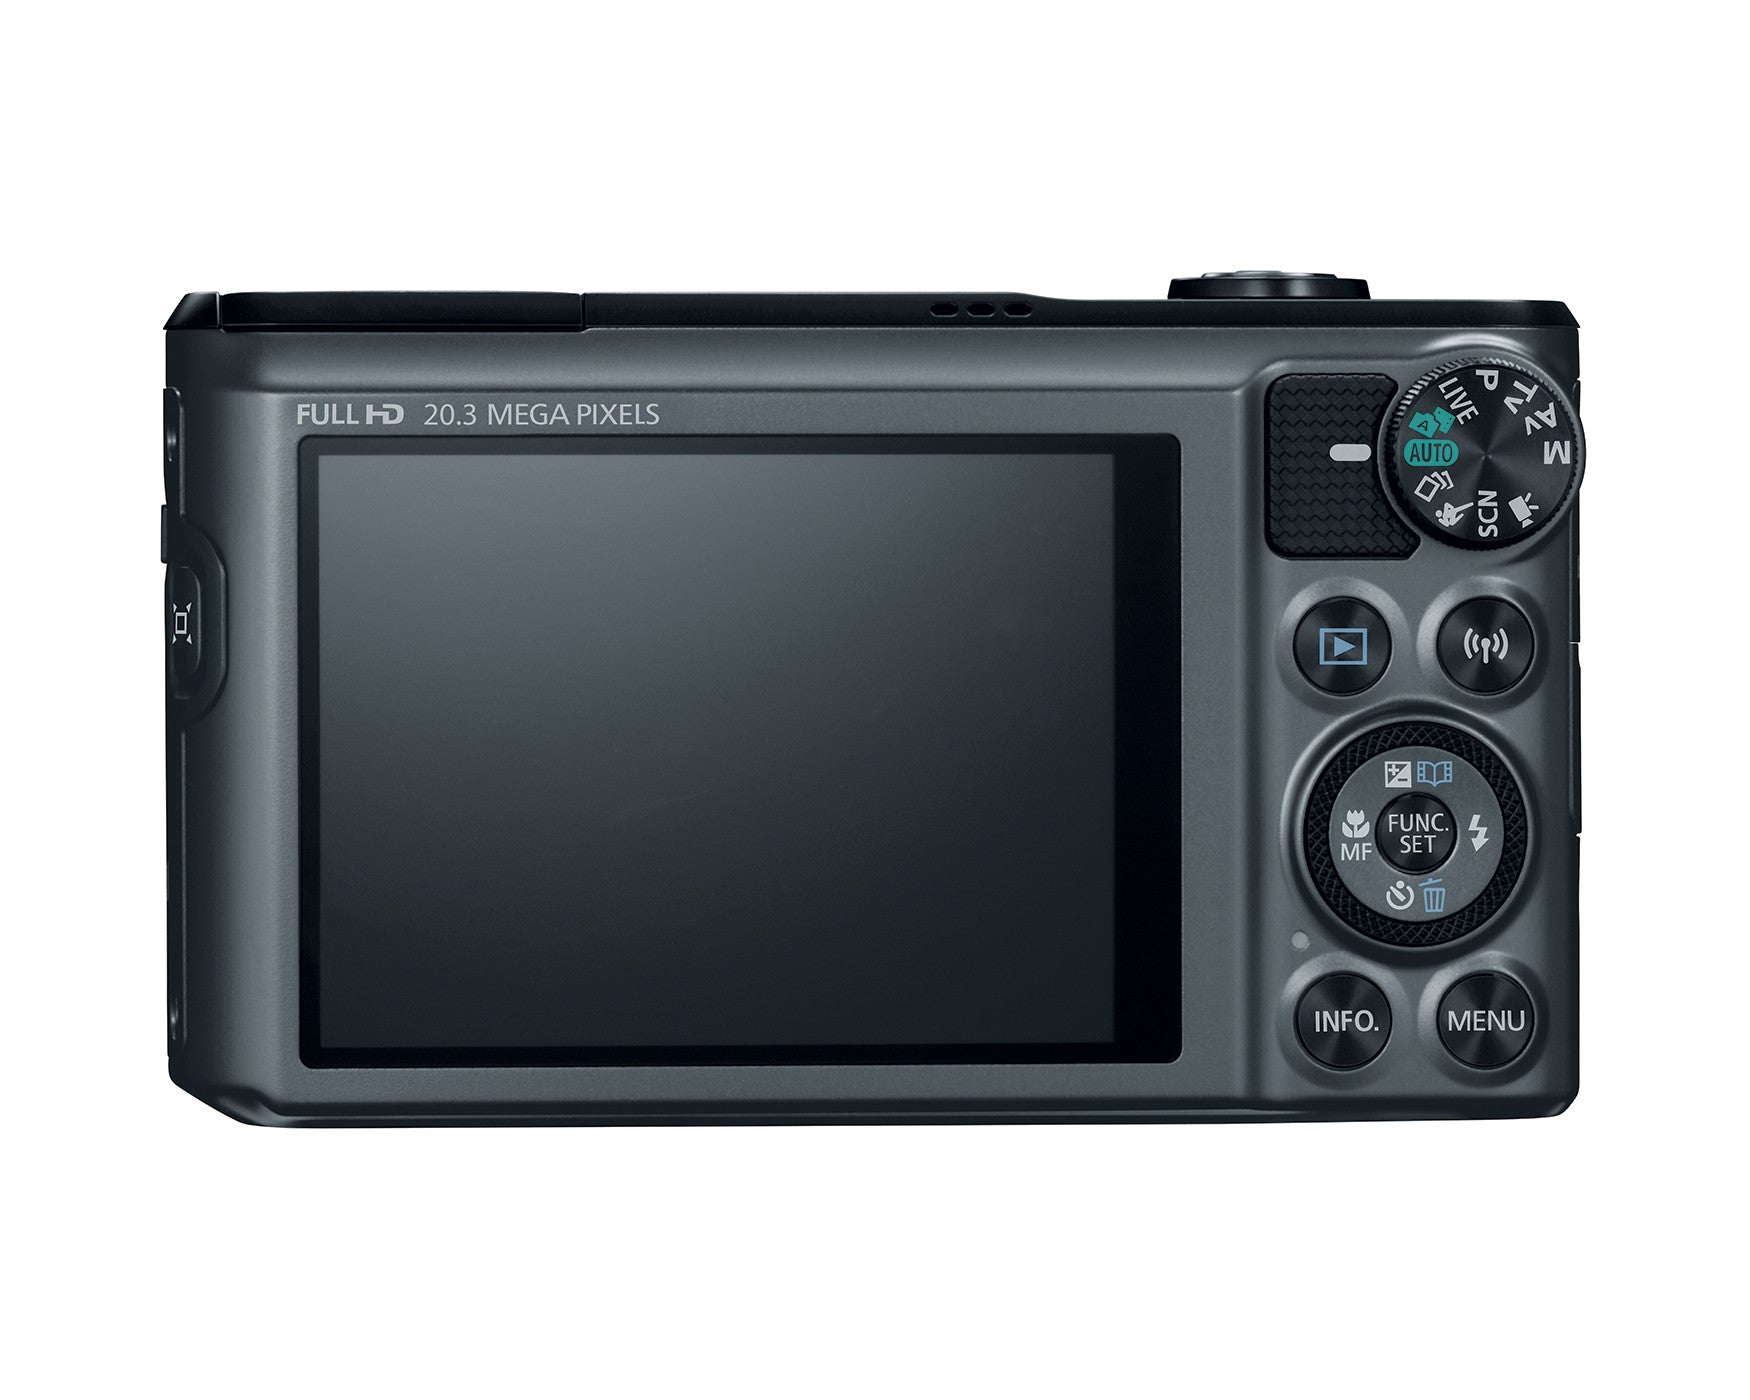 Canon PowerShot SX720HS Black Digital Camera, camera point & shoot cameras, Canon - Pictureline  - 3